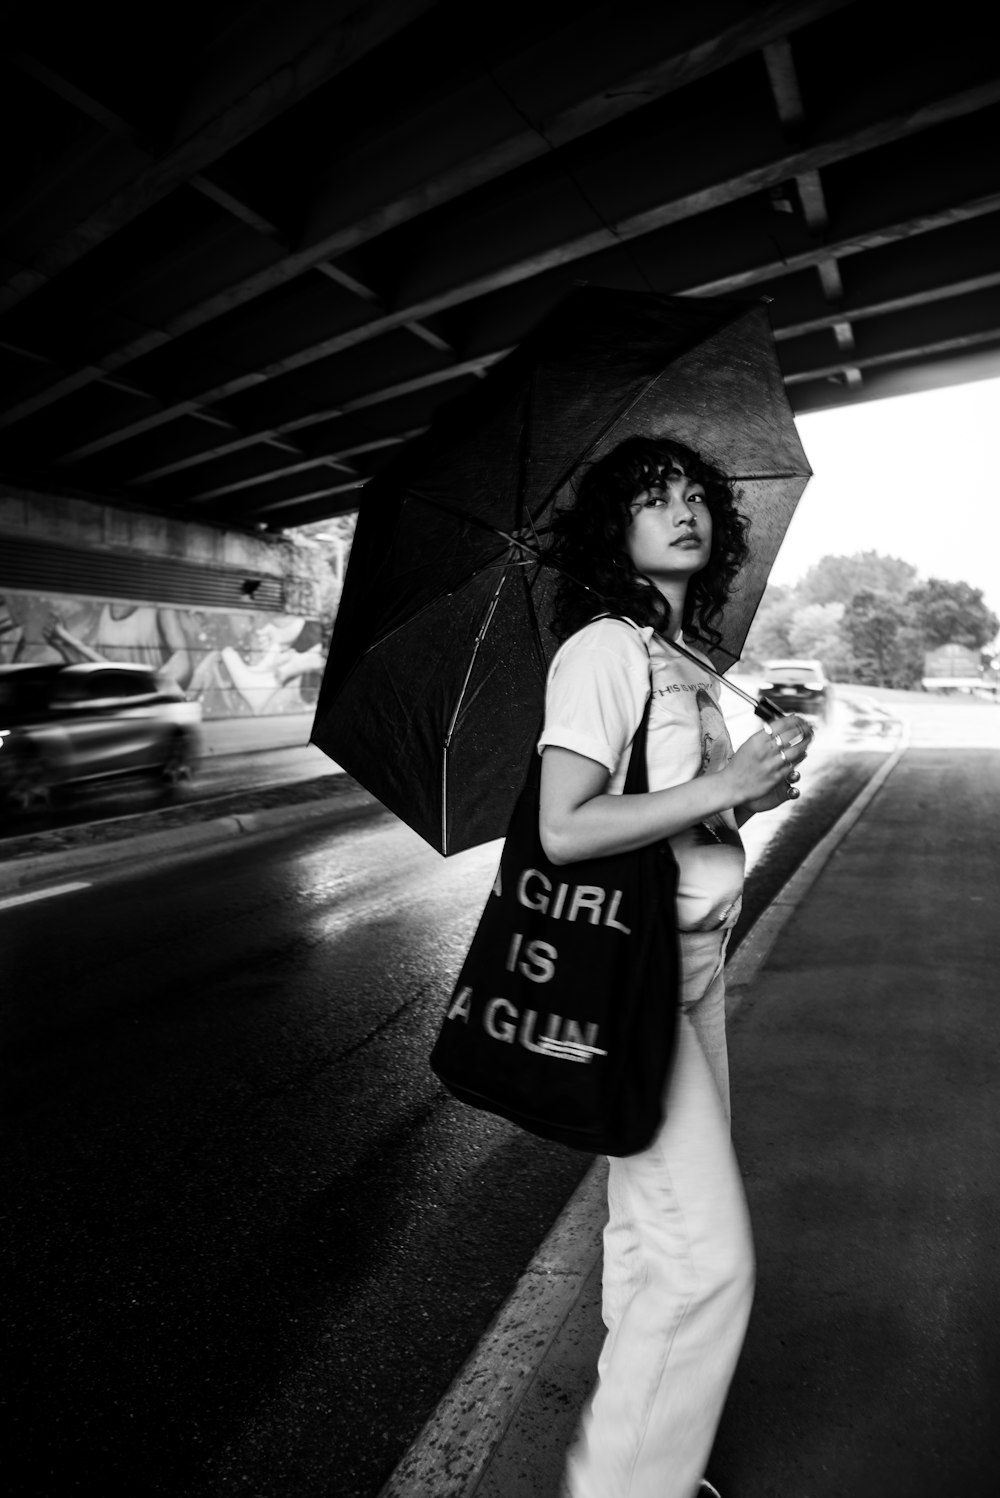 grayscale photo of woman holding umbrella